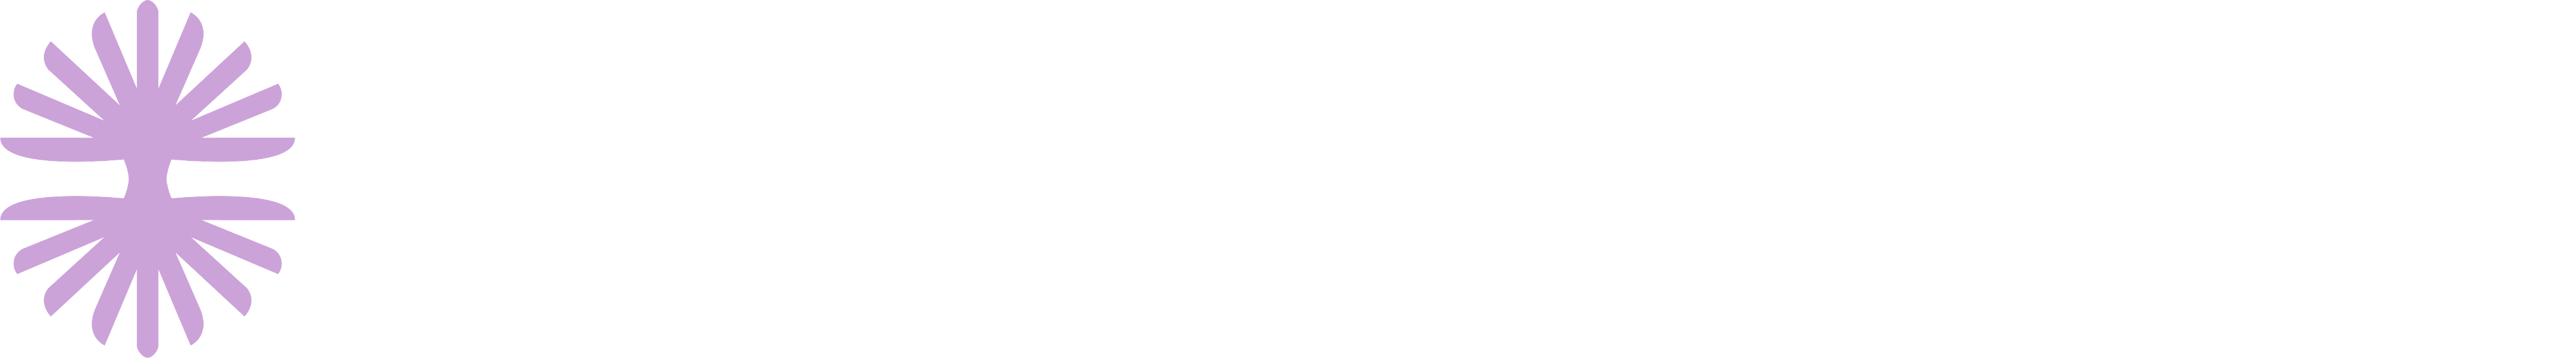 Kinkofa logo fullcolor reverse